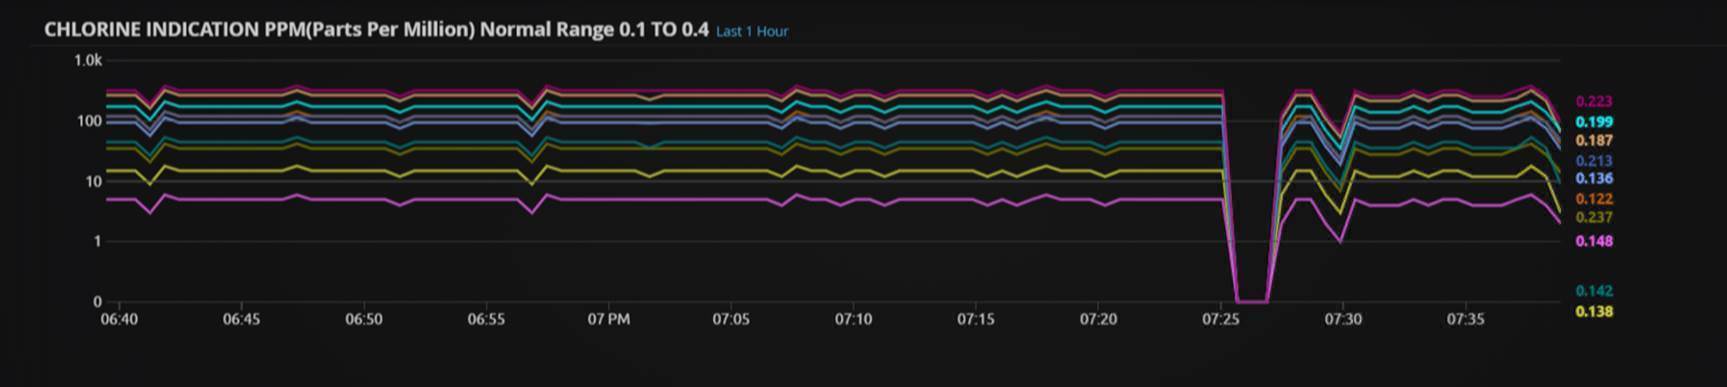 LogRhythm trend range widget visualization shows a dip in traffic below the normal range